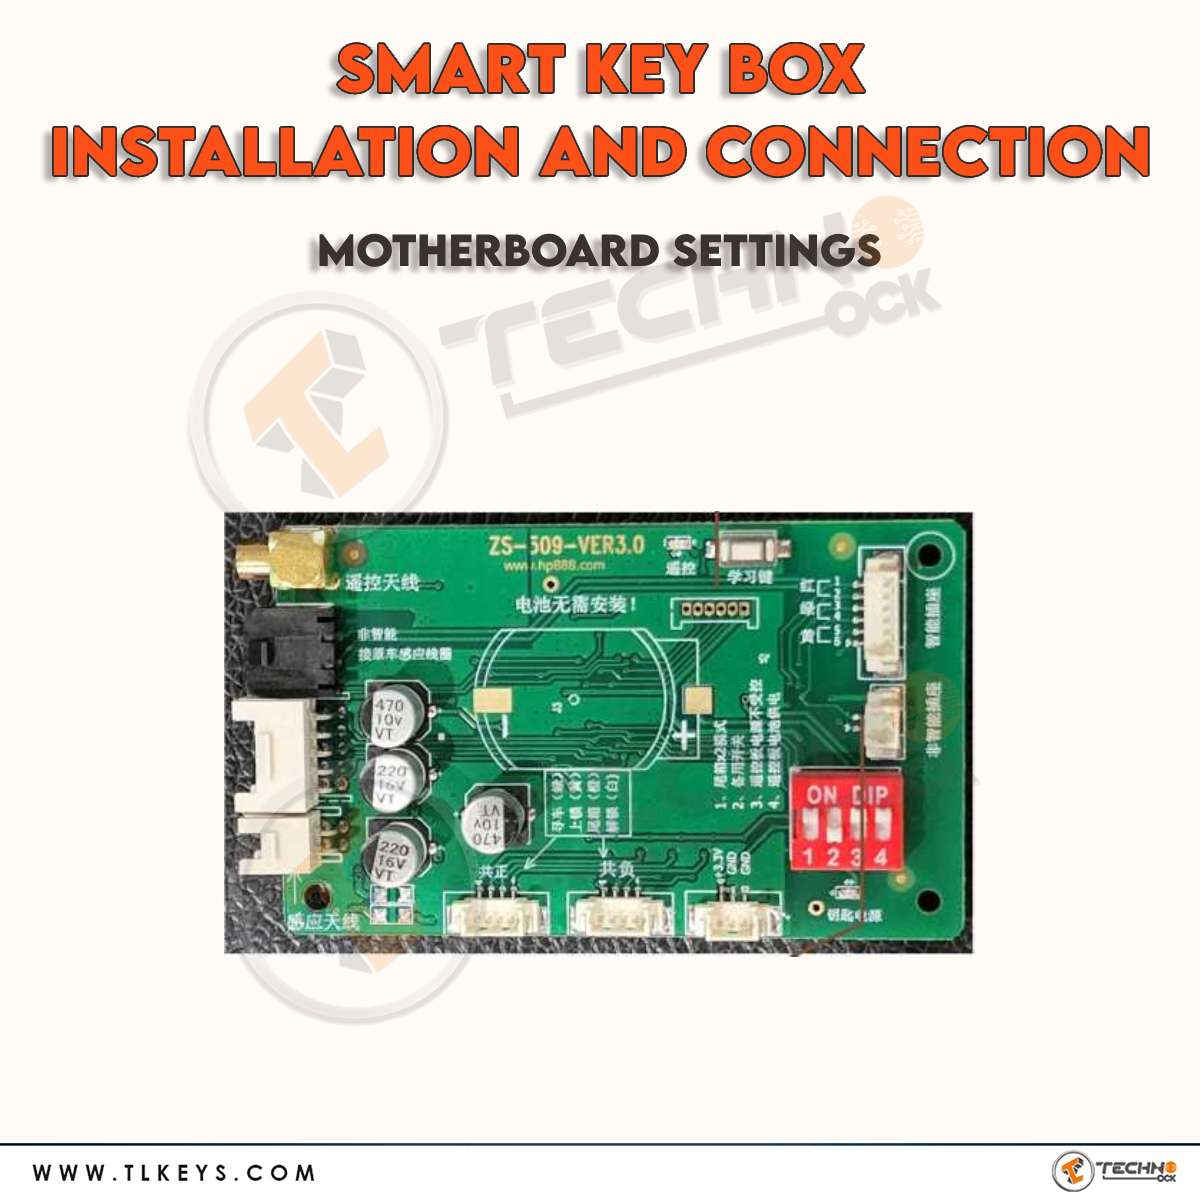 Smart Key Box Motherboard Settings